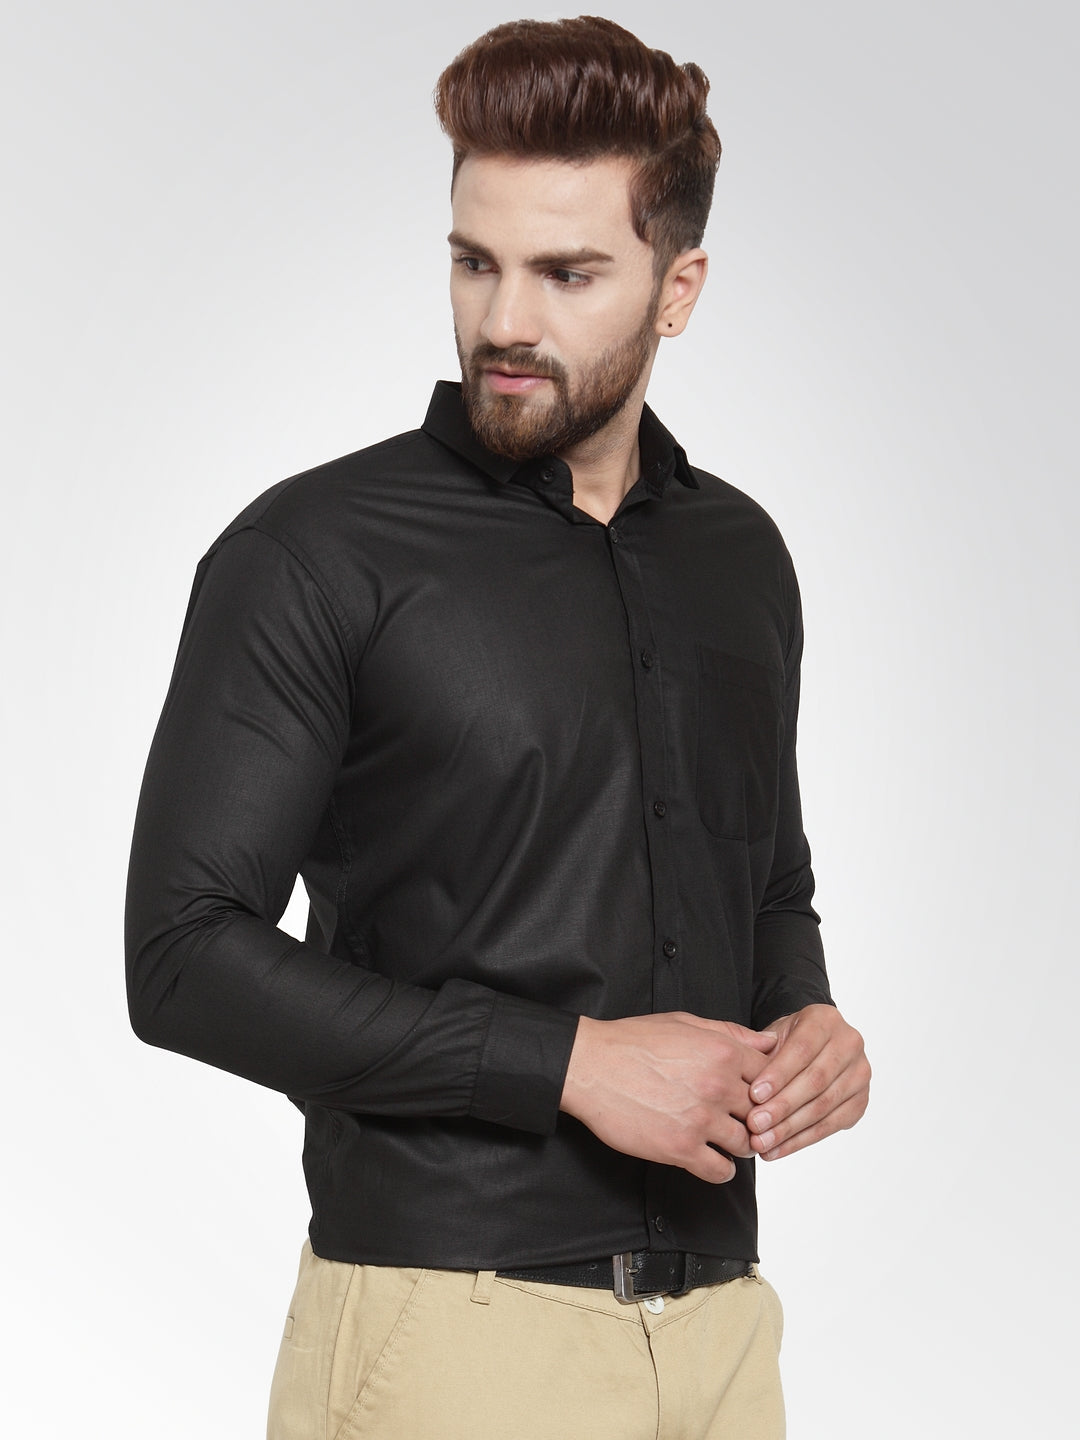 Men's Cotton Solid Black Formal Shirt's ( SF 361Black ) - Jainish